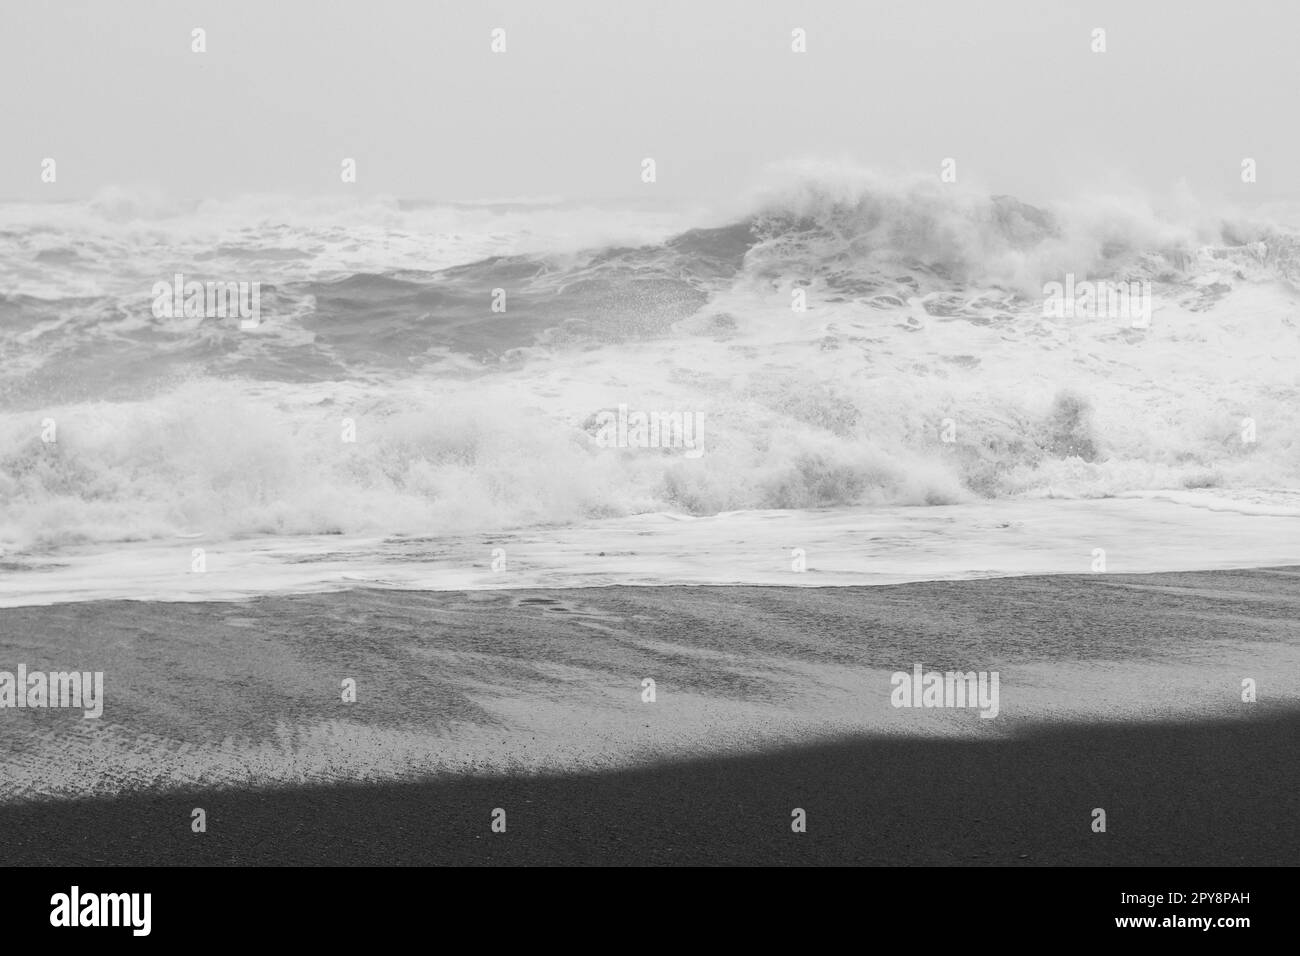 Belleza de la tormenta en la foto de paisaje monocromo junto al mar Foto de stock